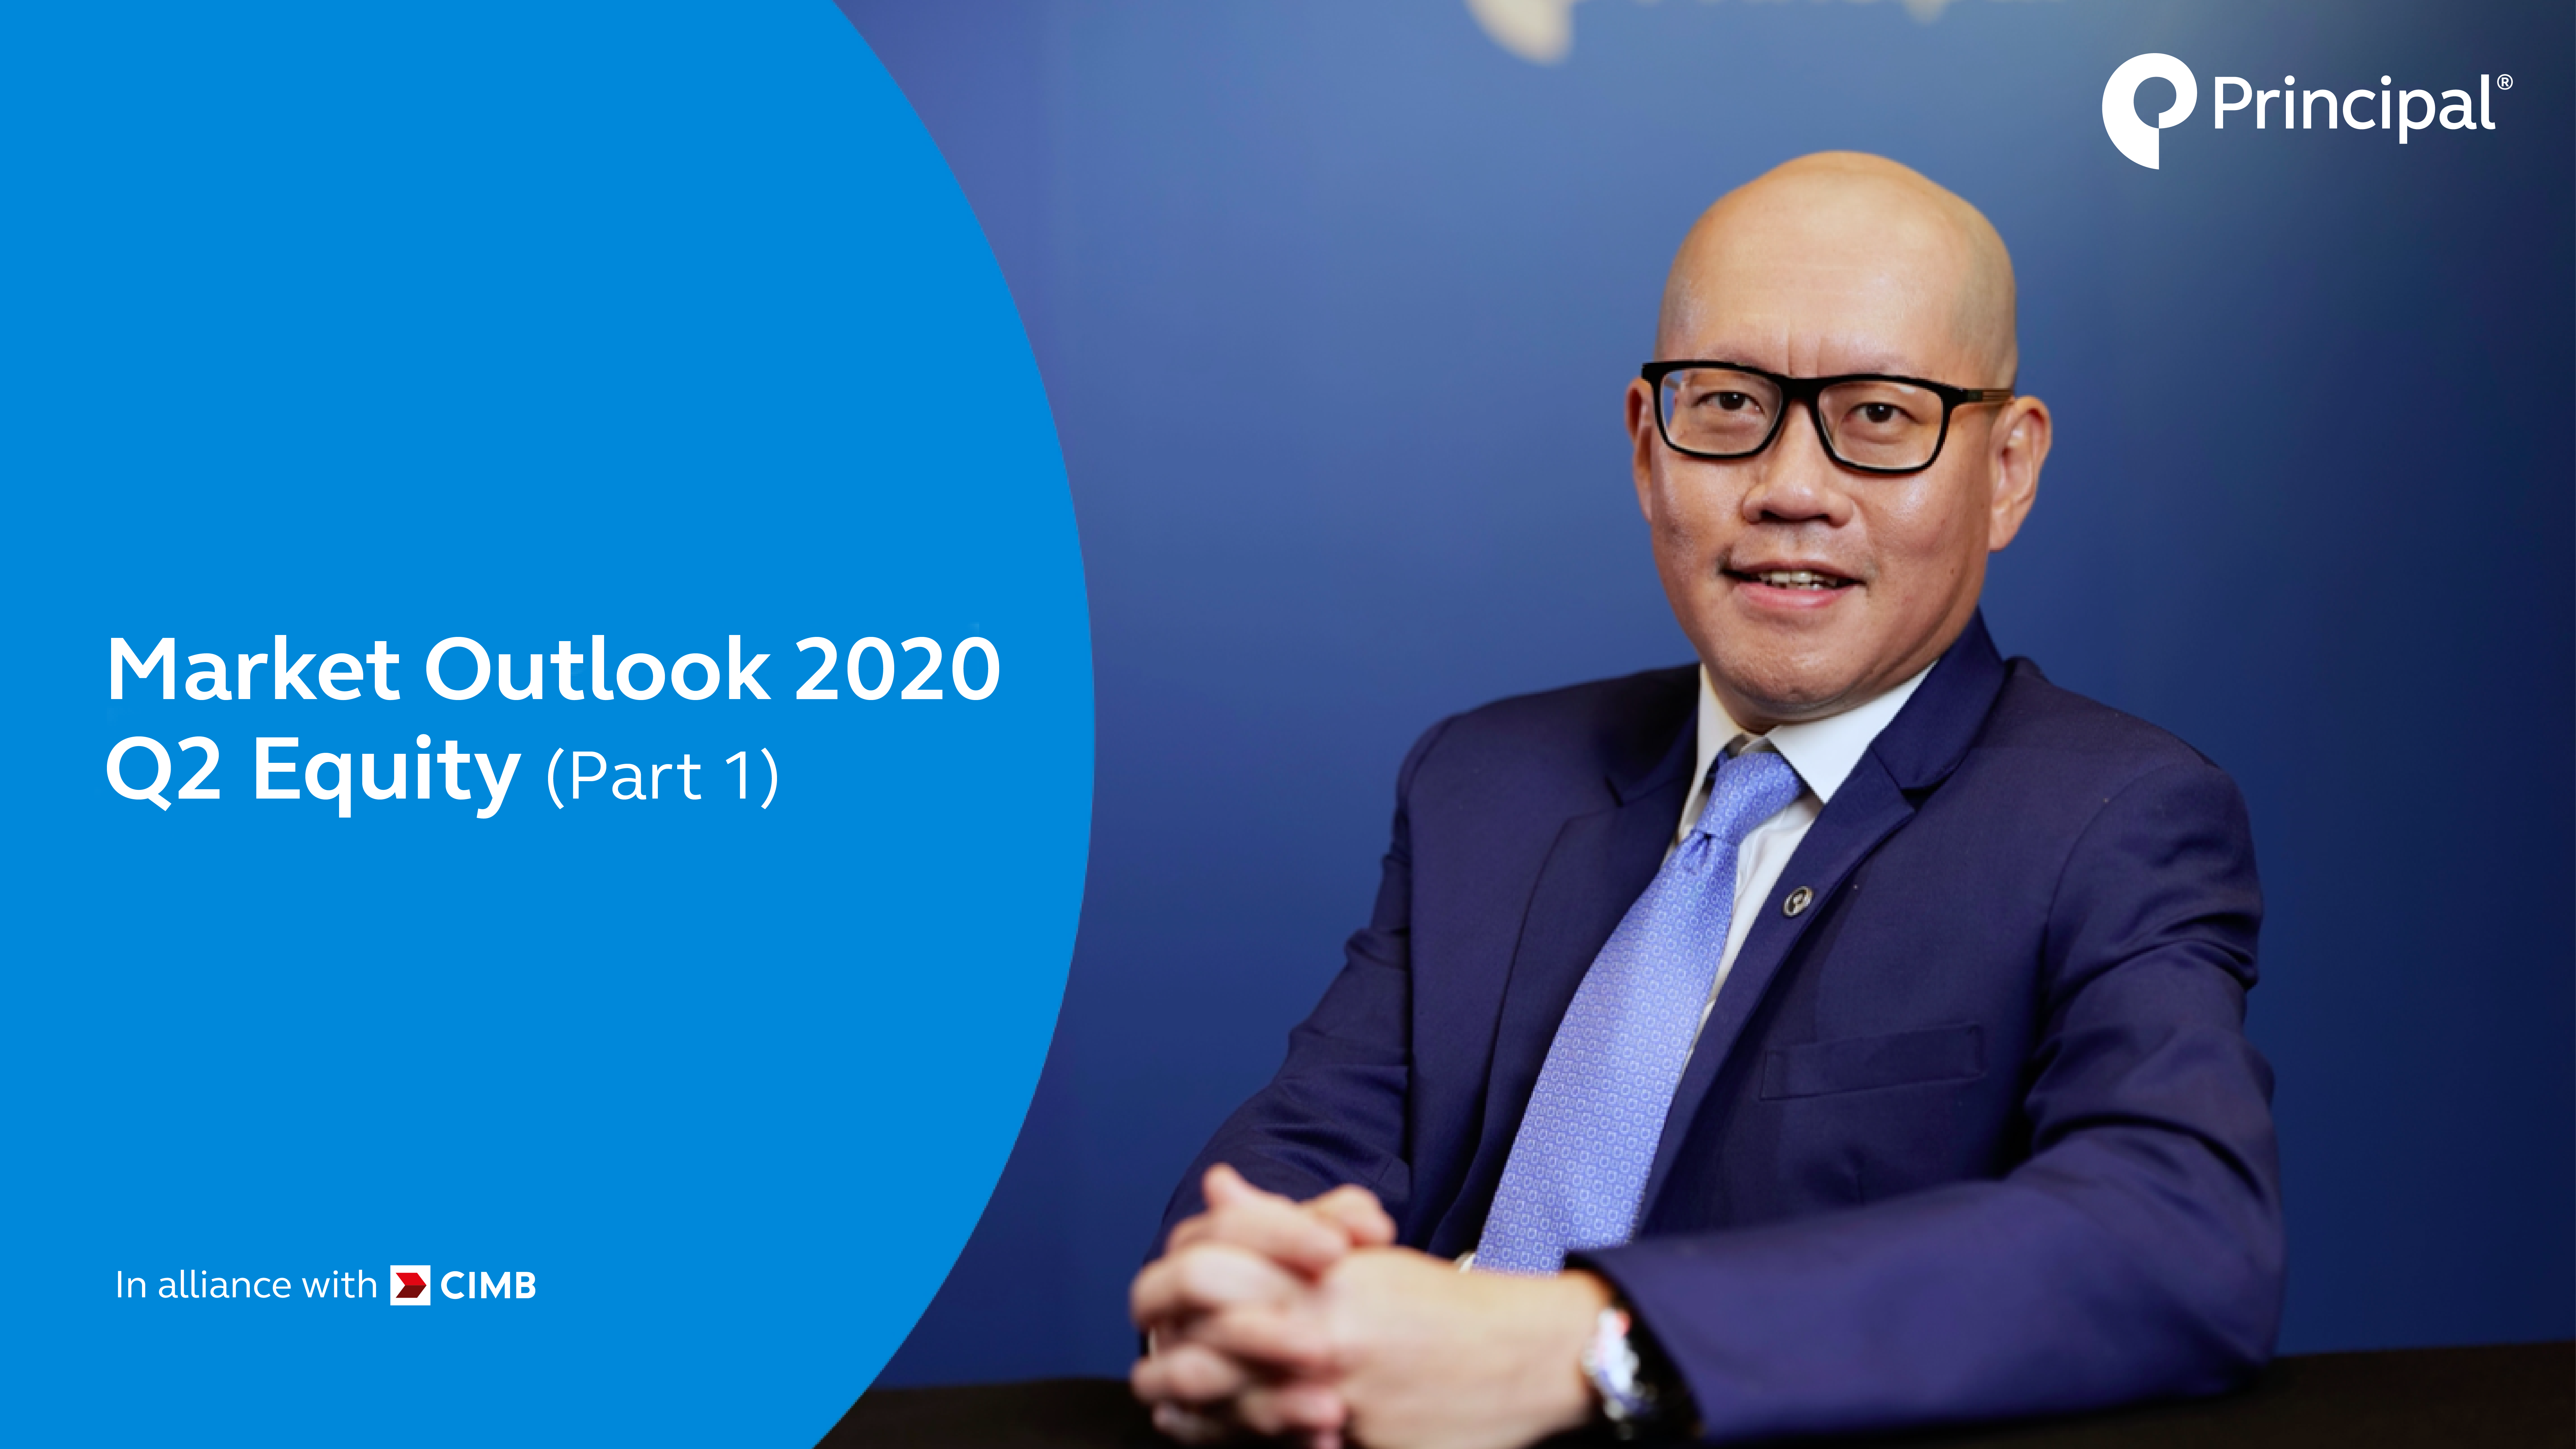 Principal Market Outlook 2020 Q2 Equity